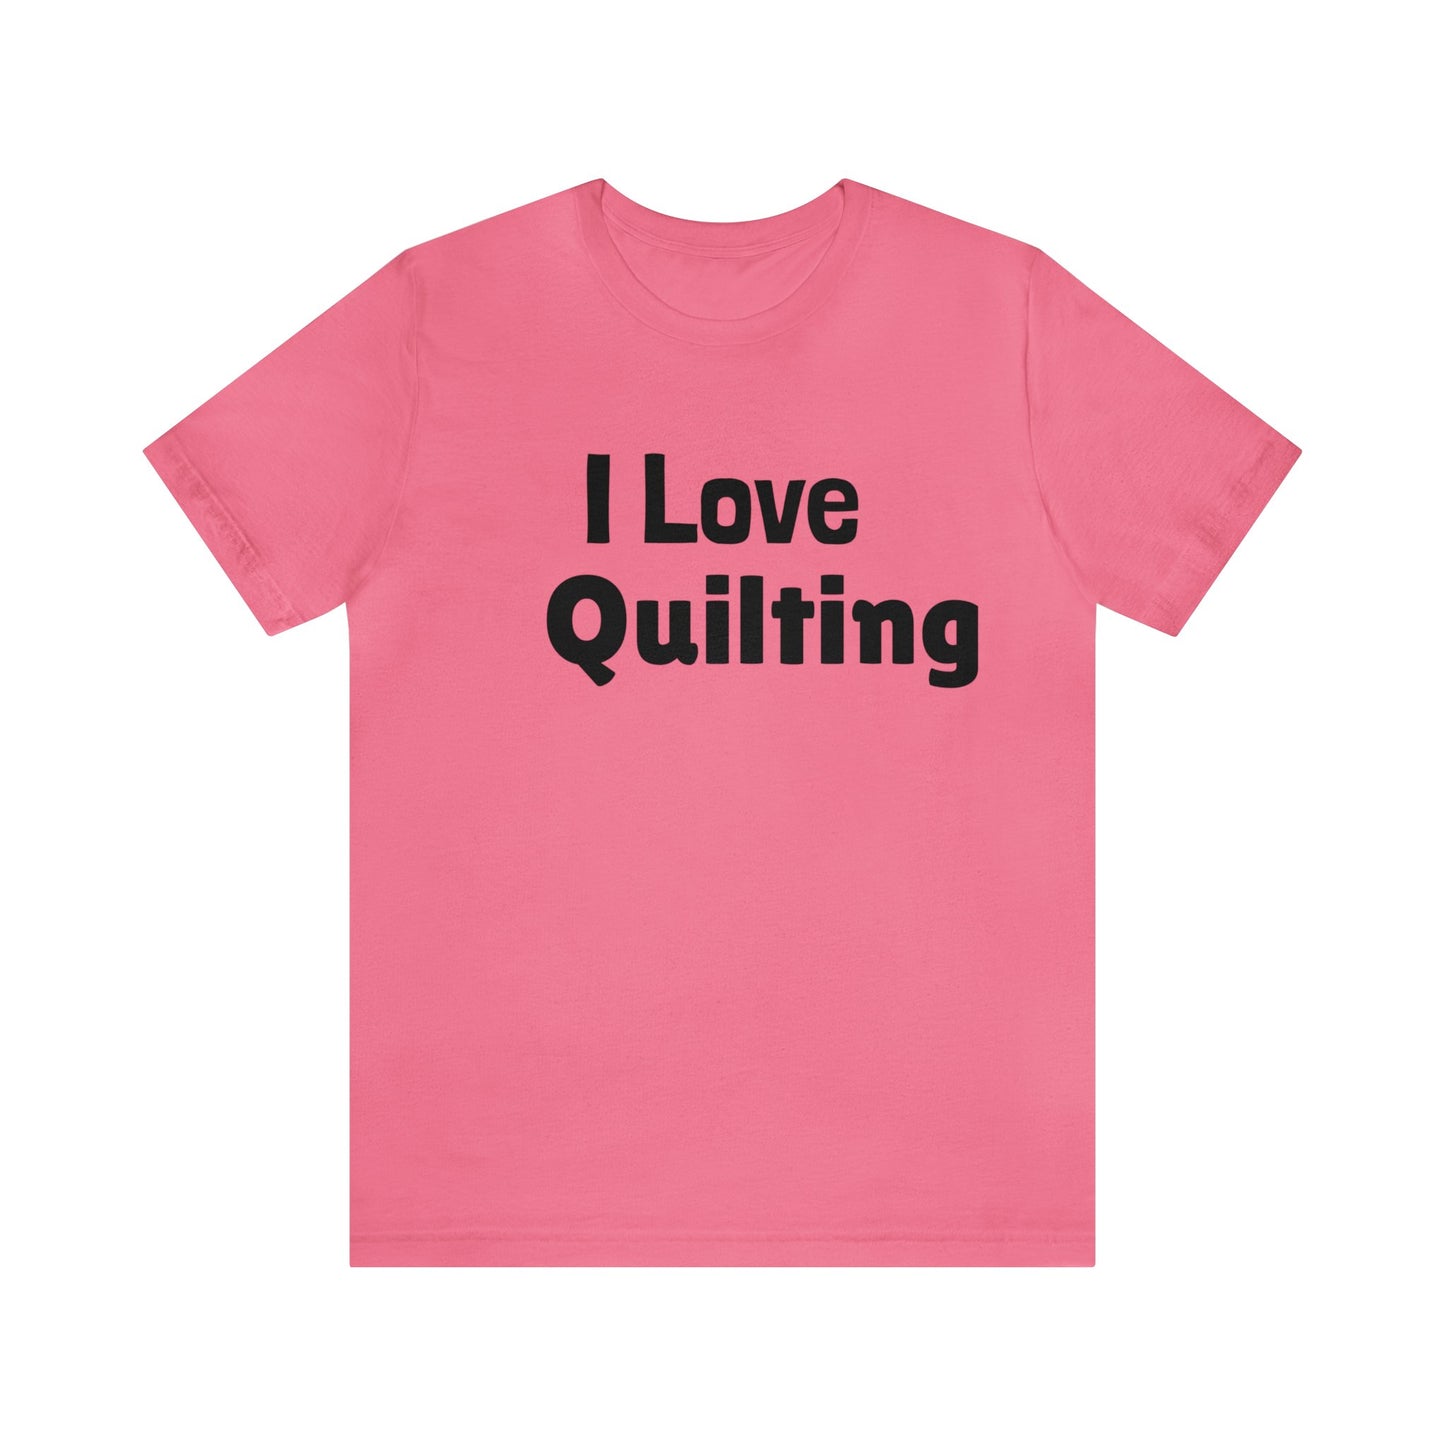 Quilter T-Shirt | Quilter Gift Idea Charity Pink T-Shirt Petrova Designs